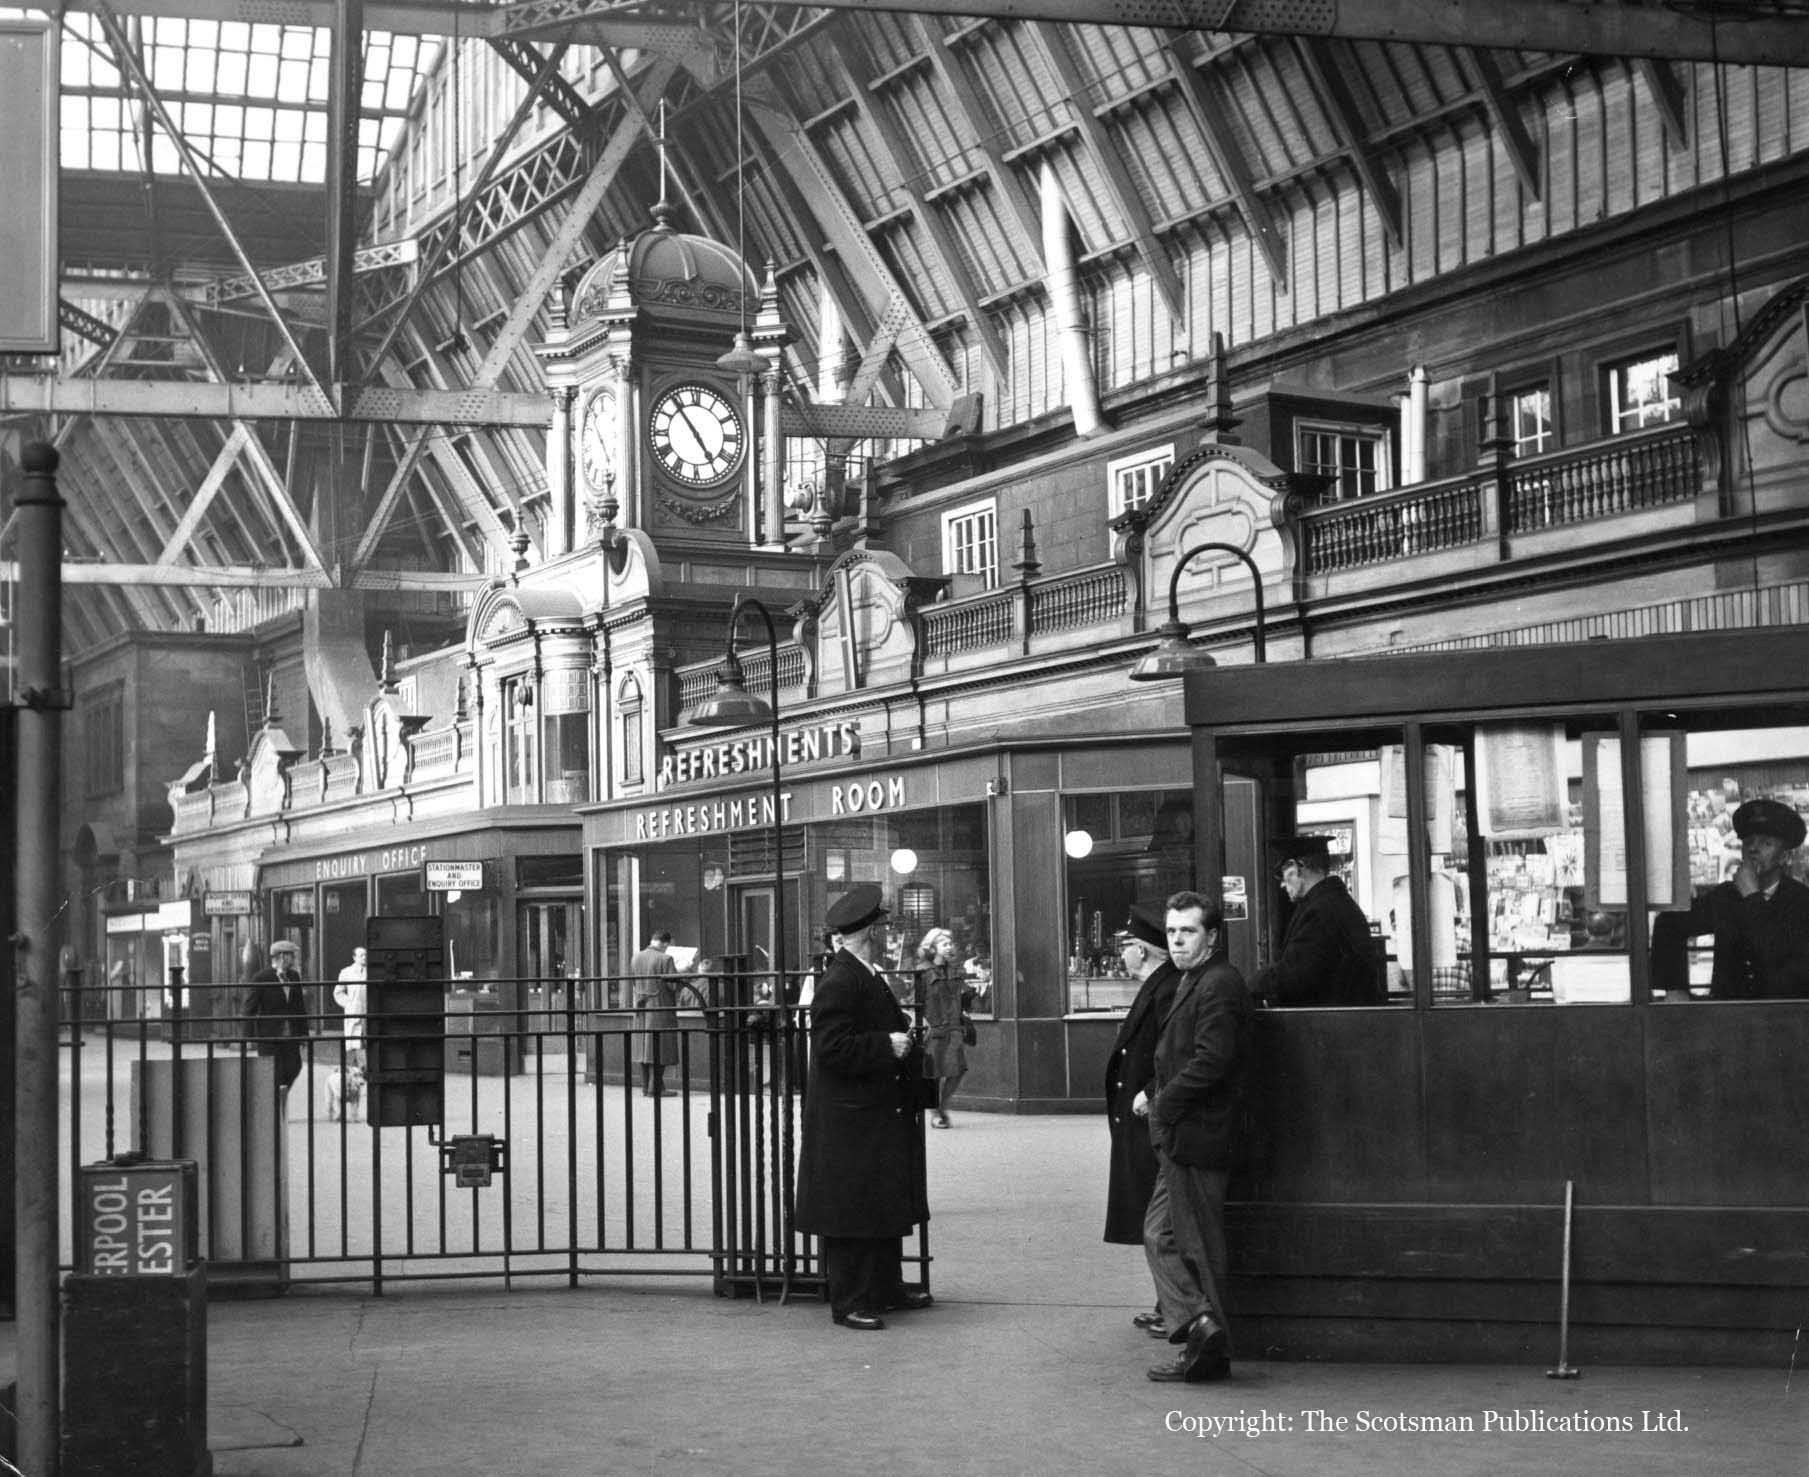 Caledonian Station aka Caley Station Princes Street Edinburgh in 1965.